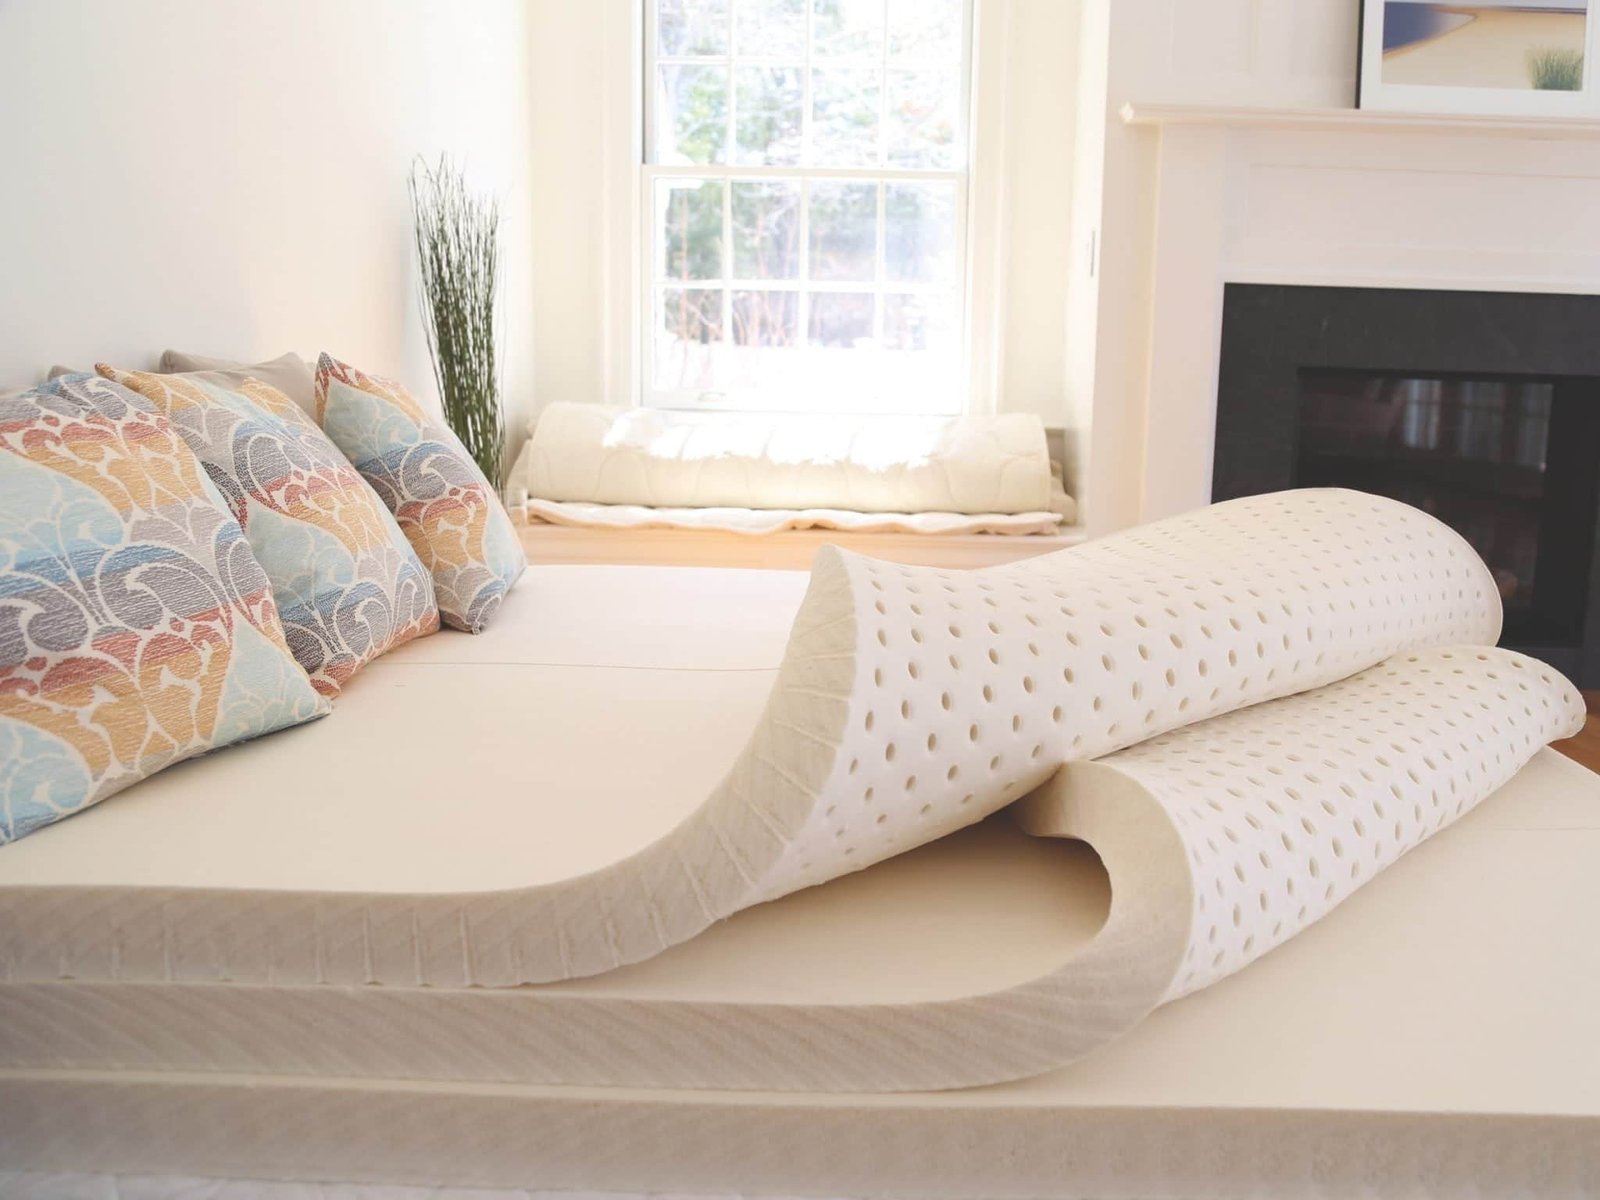 best latex hybrid mattress for side sleepers